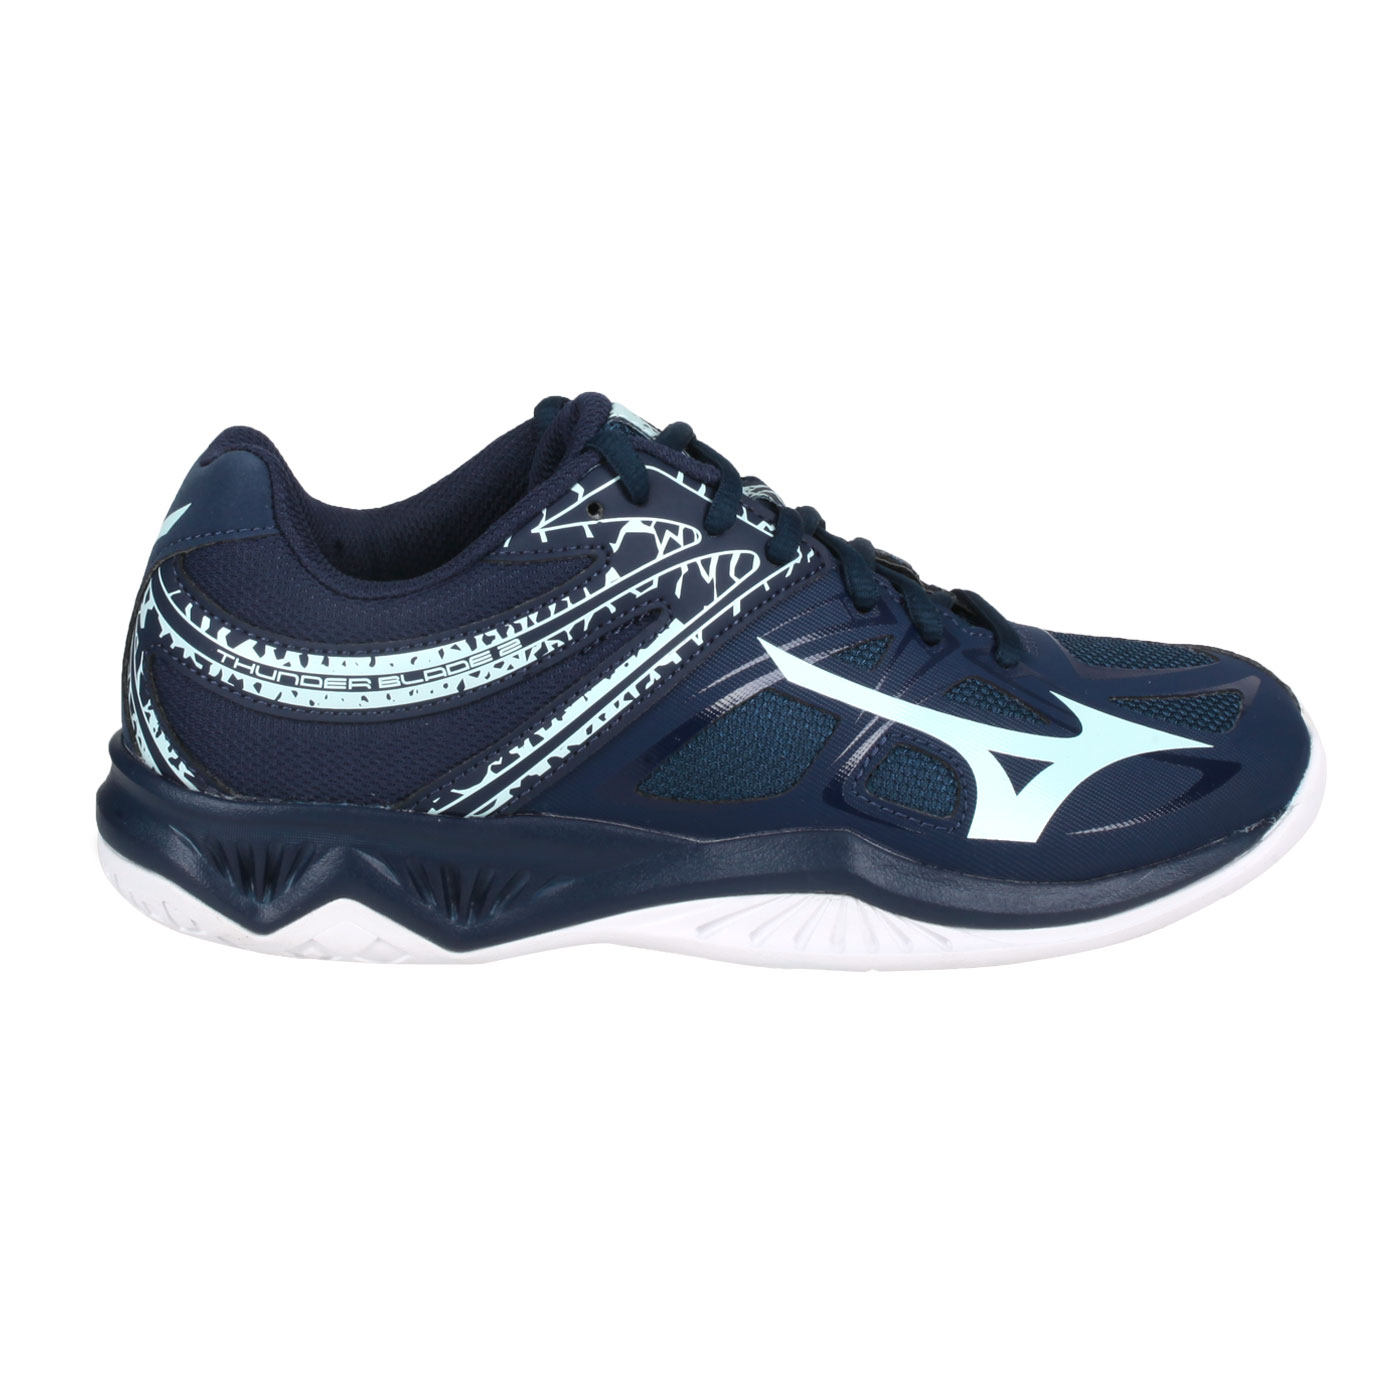 MIZUNO 排球鞋  @THUNDER BLADE 2@V1GA197013 - 深藍水藍